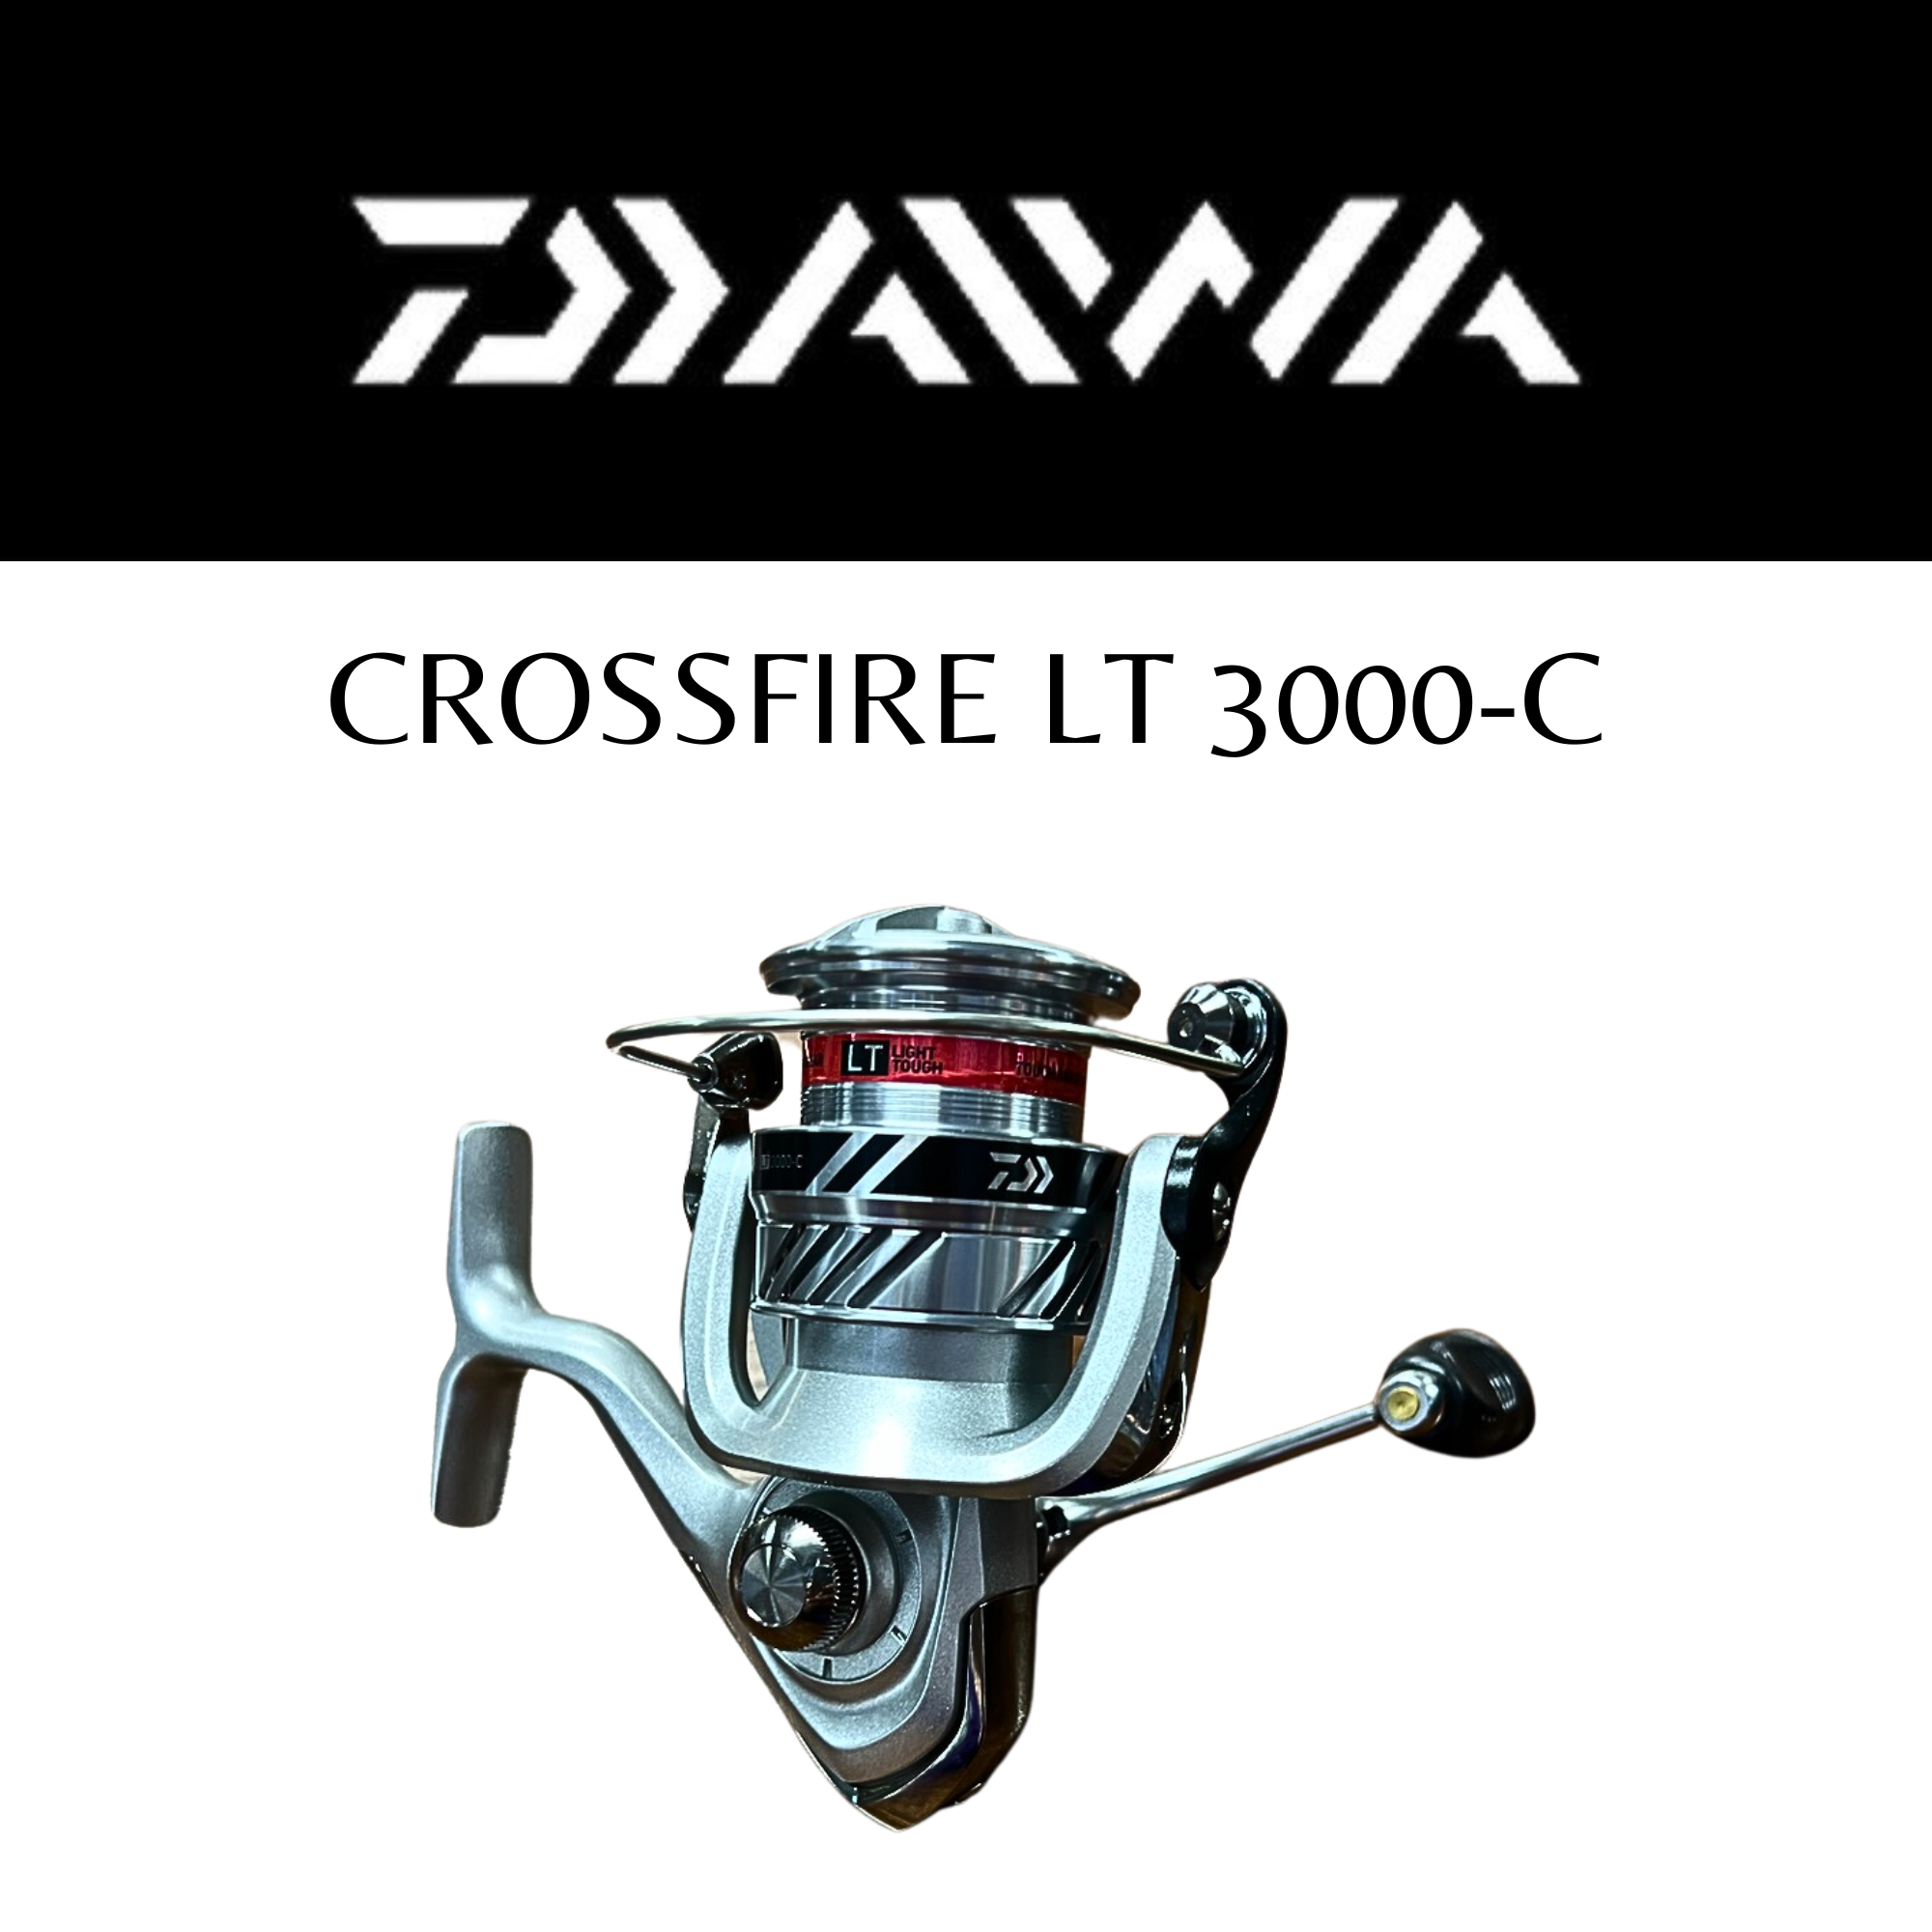 Crossfire LT 3000-C, Daiwa Spinning Fishing Reel